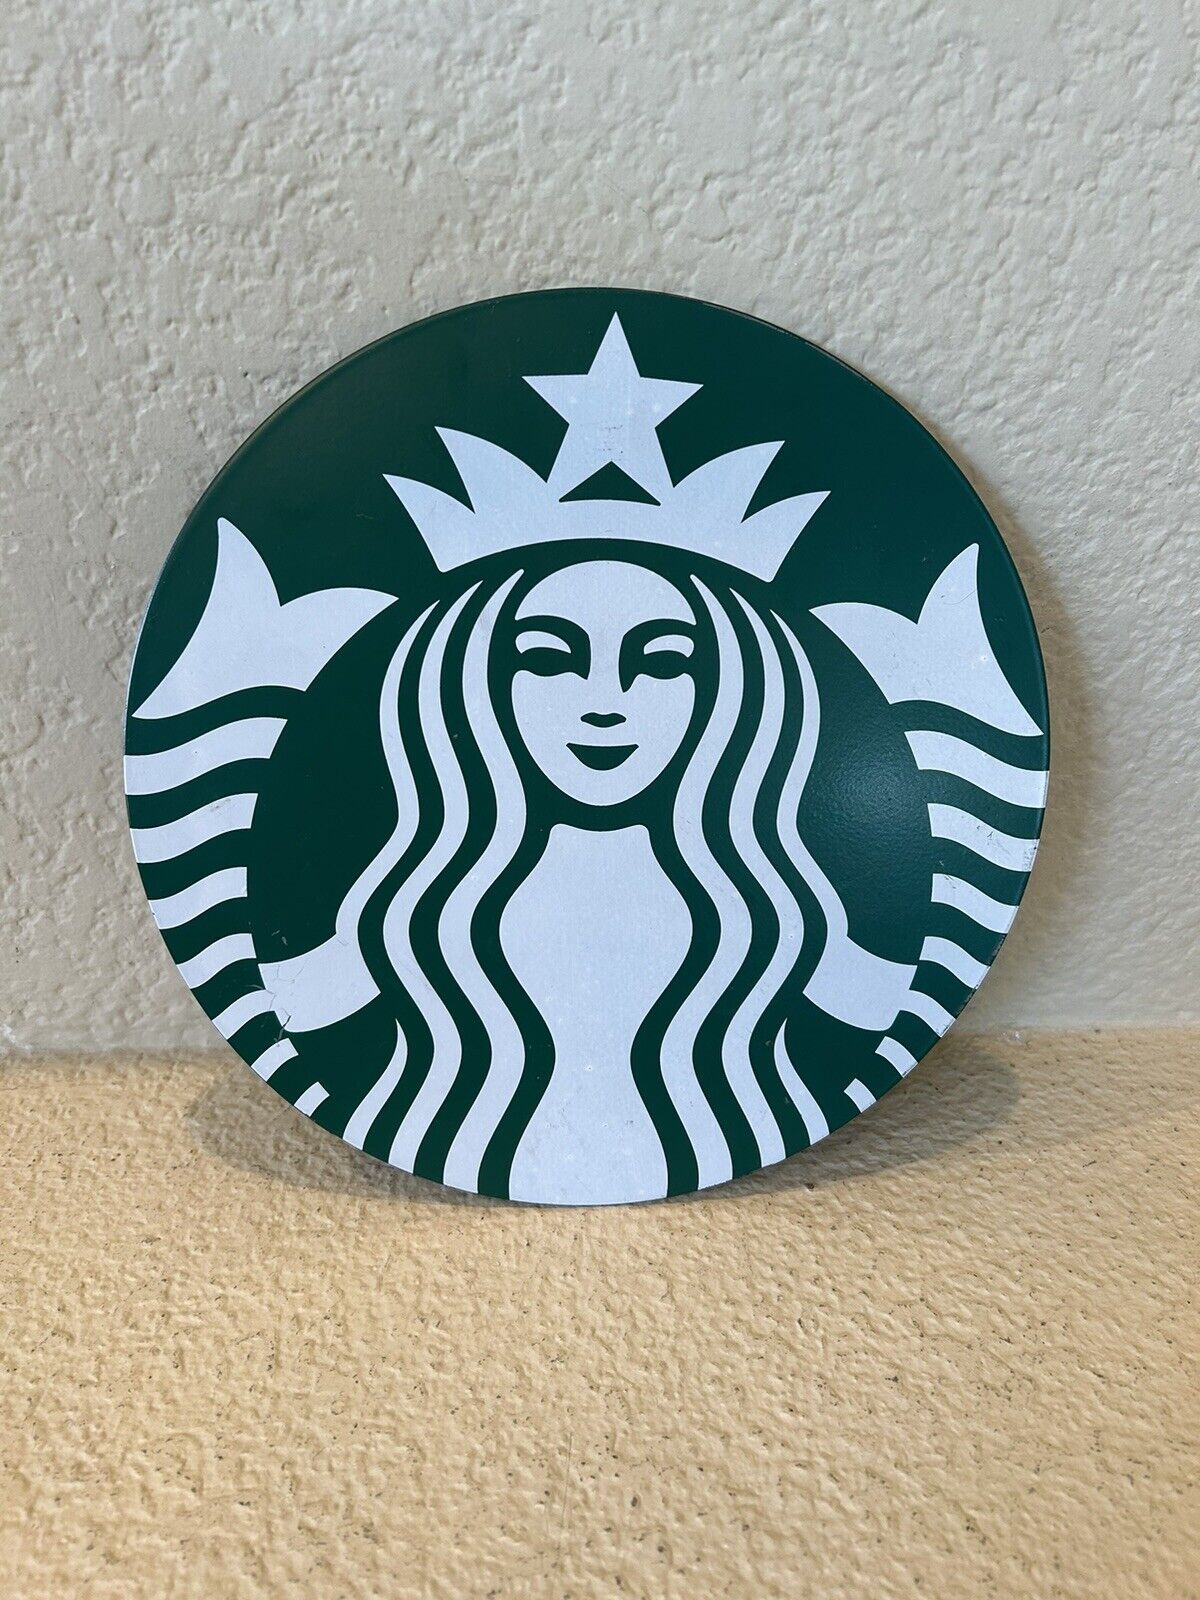 Original Starbucks Coffee Store Sign  10inch VERY RARE Pre-Owned